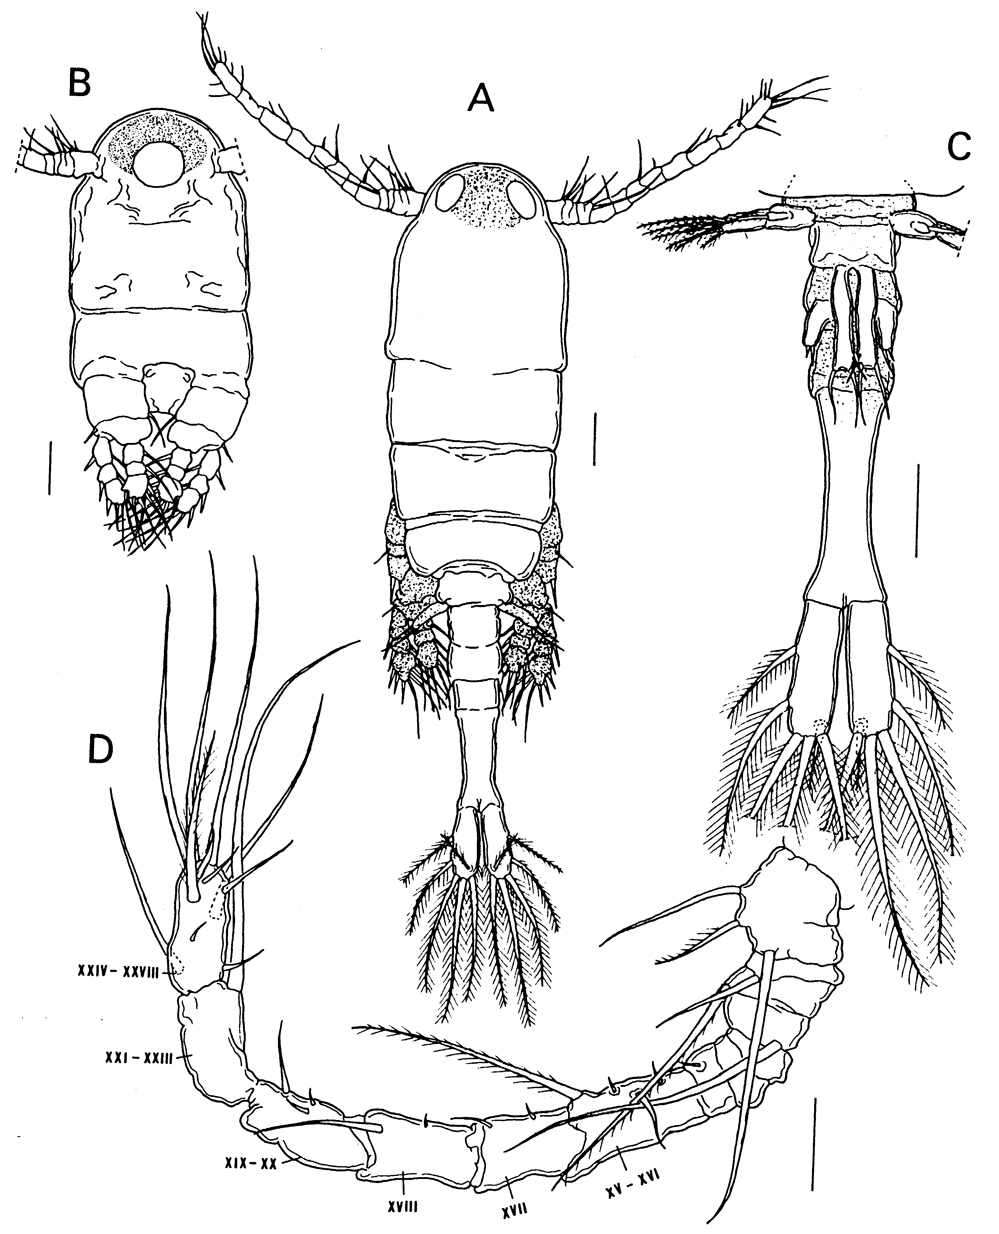 Species Caribeopsyllus amphiodiae - Plate 4 of morphological figures